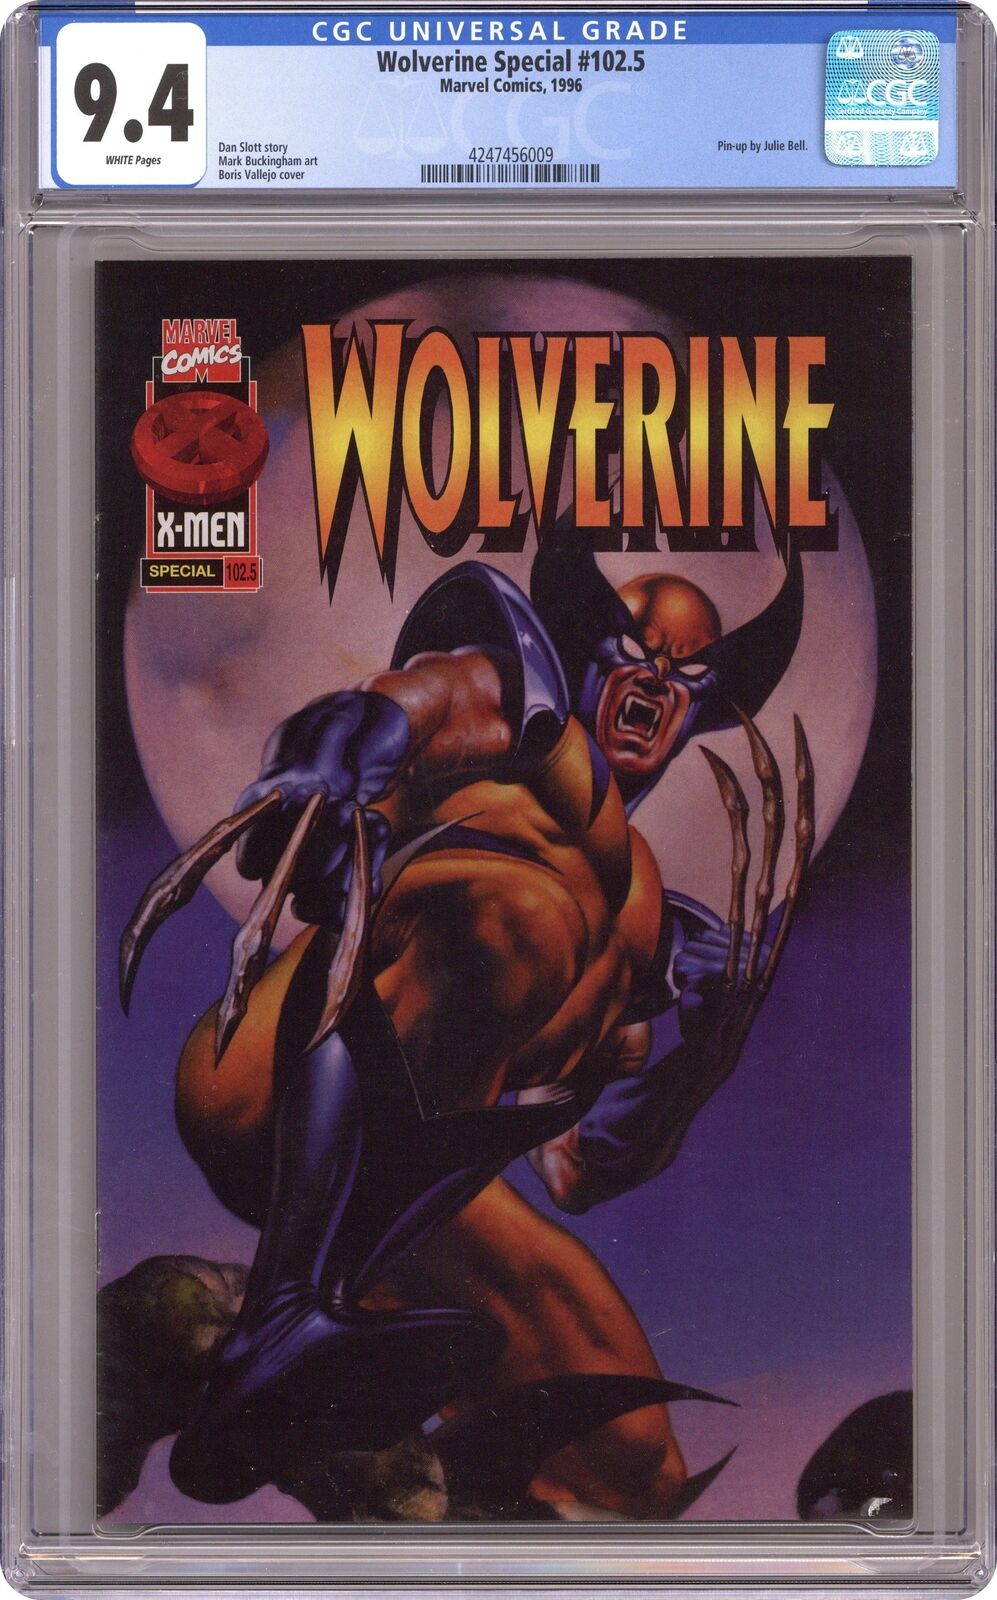 Wolverine #102.5 CGC 9.4 1996 4247456009